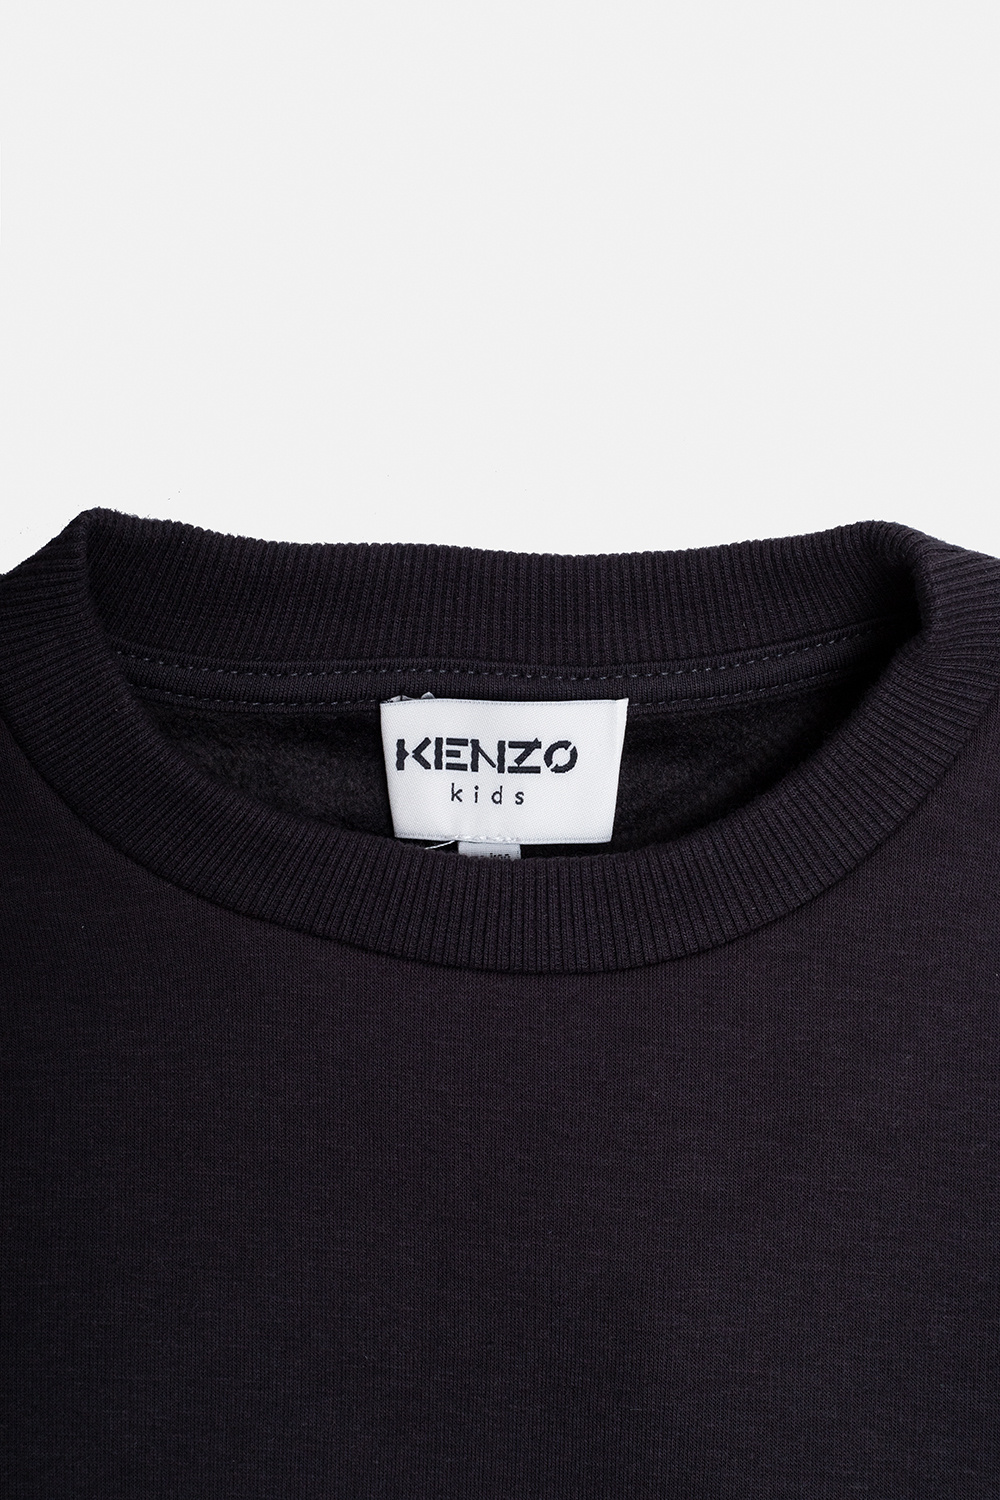 Kenzo Kids adidas Originals Polar Fleece Sweat Pants